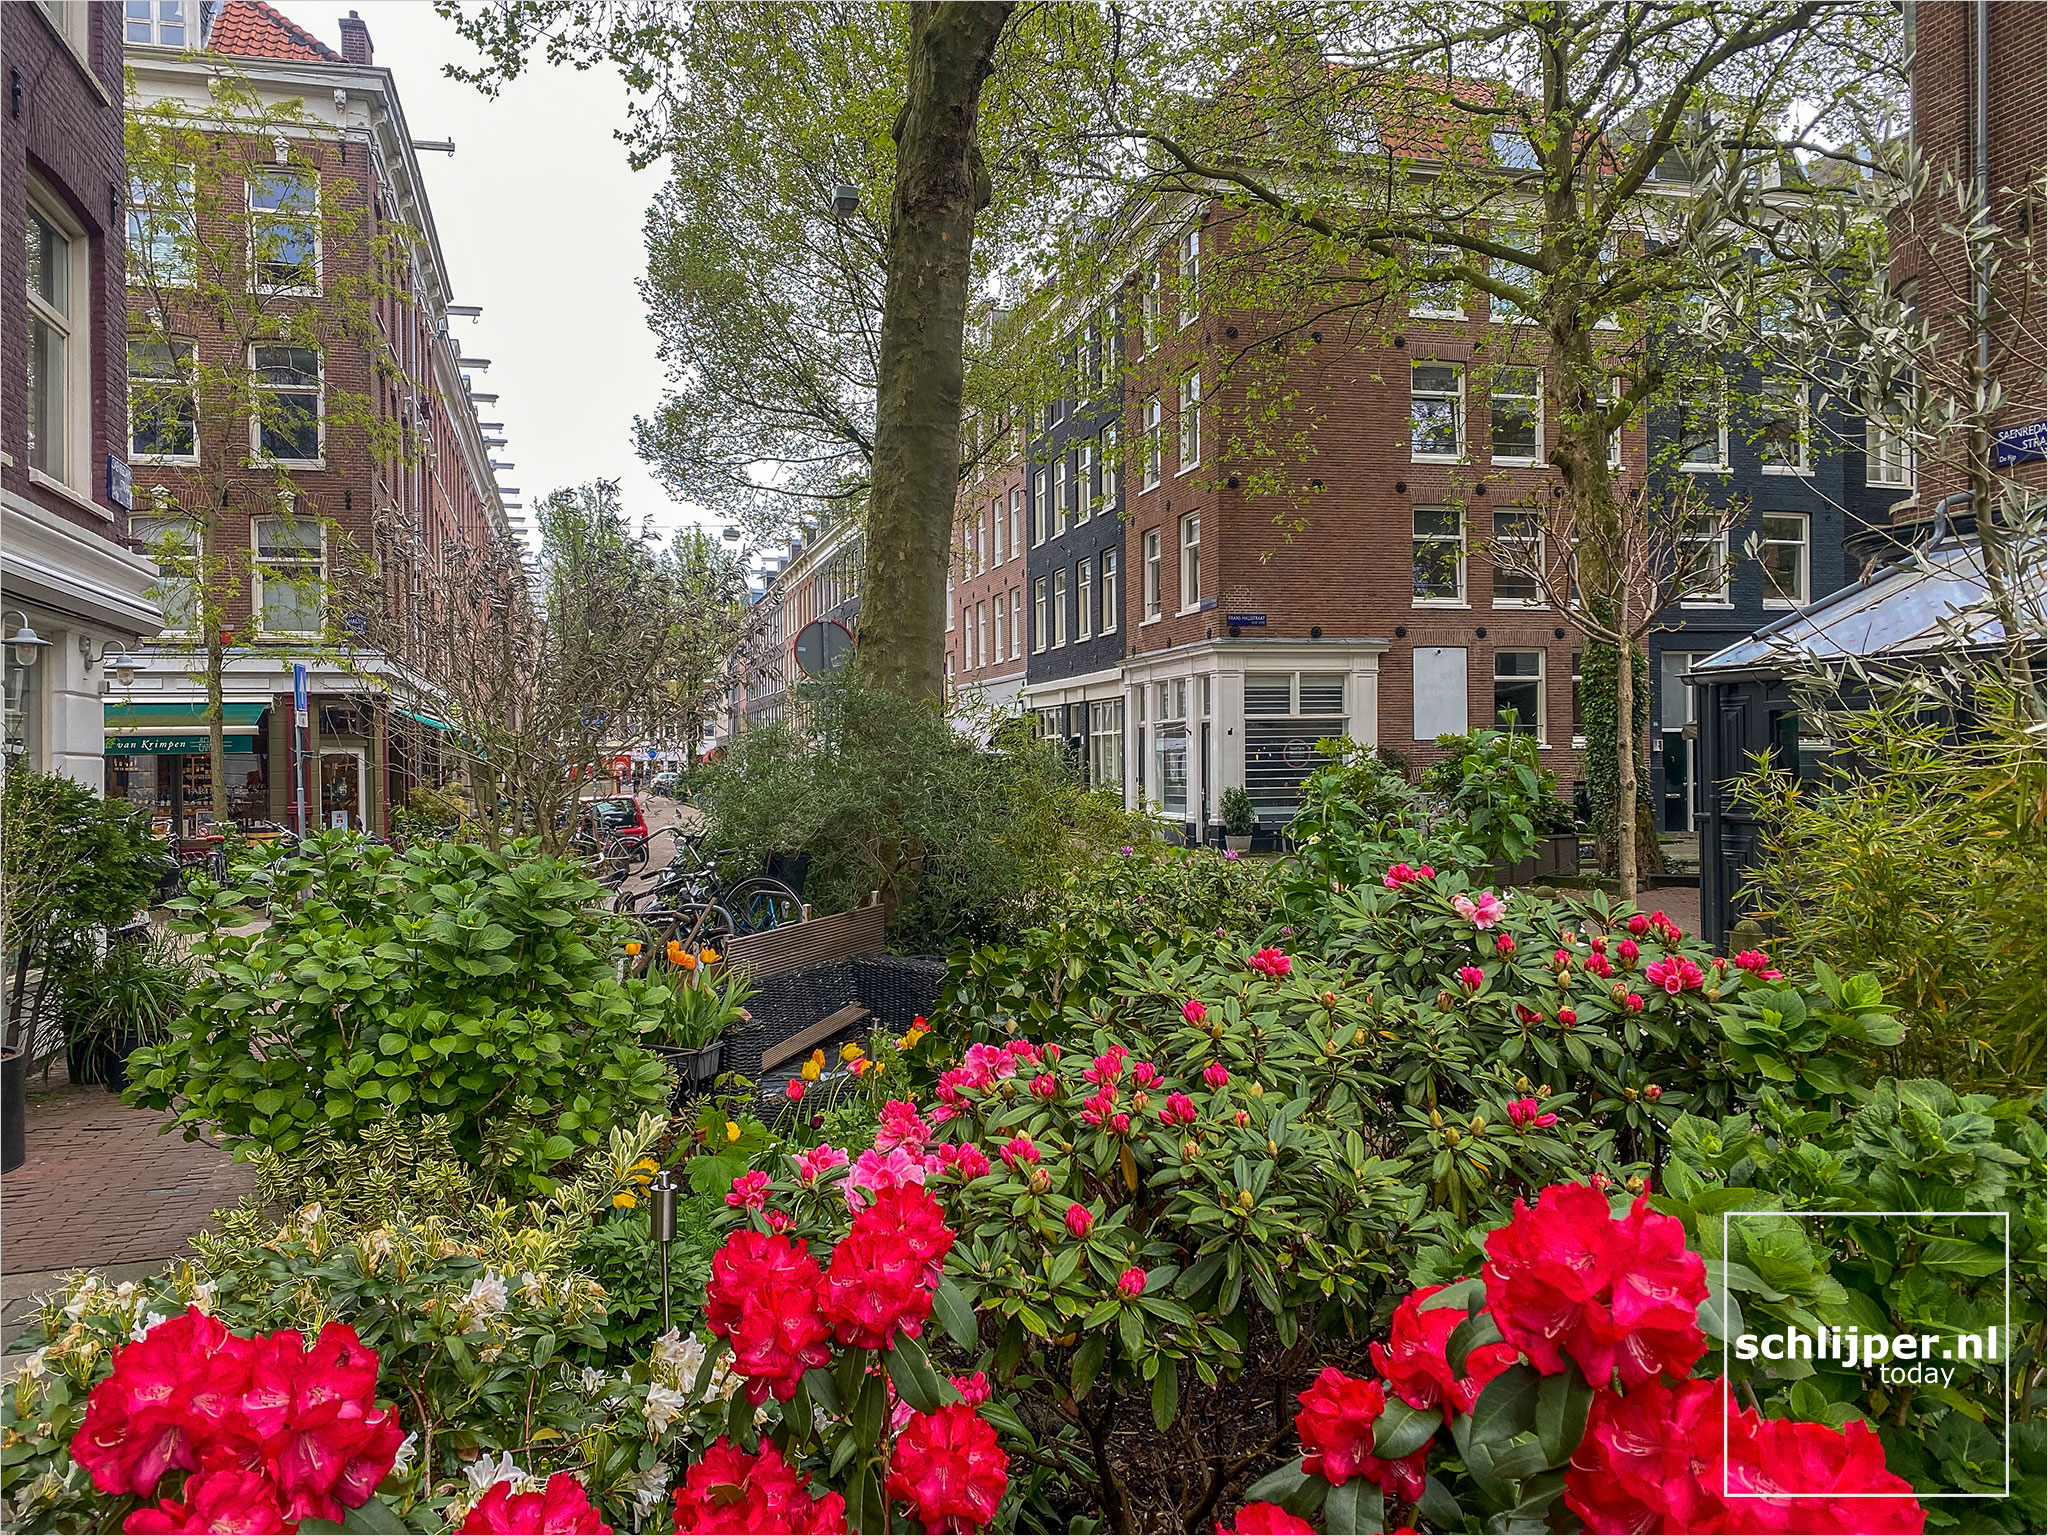 The Netherlands, Amsterdam, 22 mei 2021